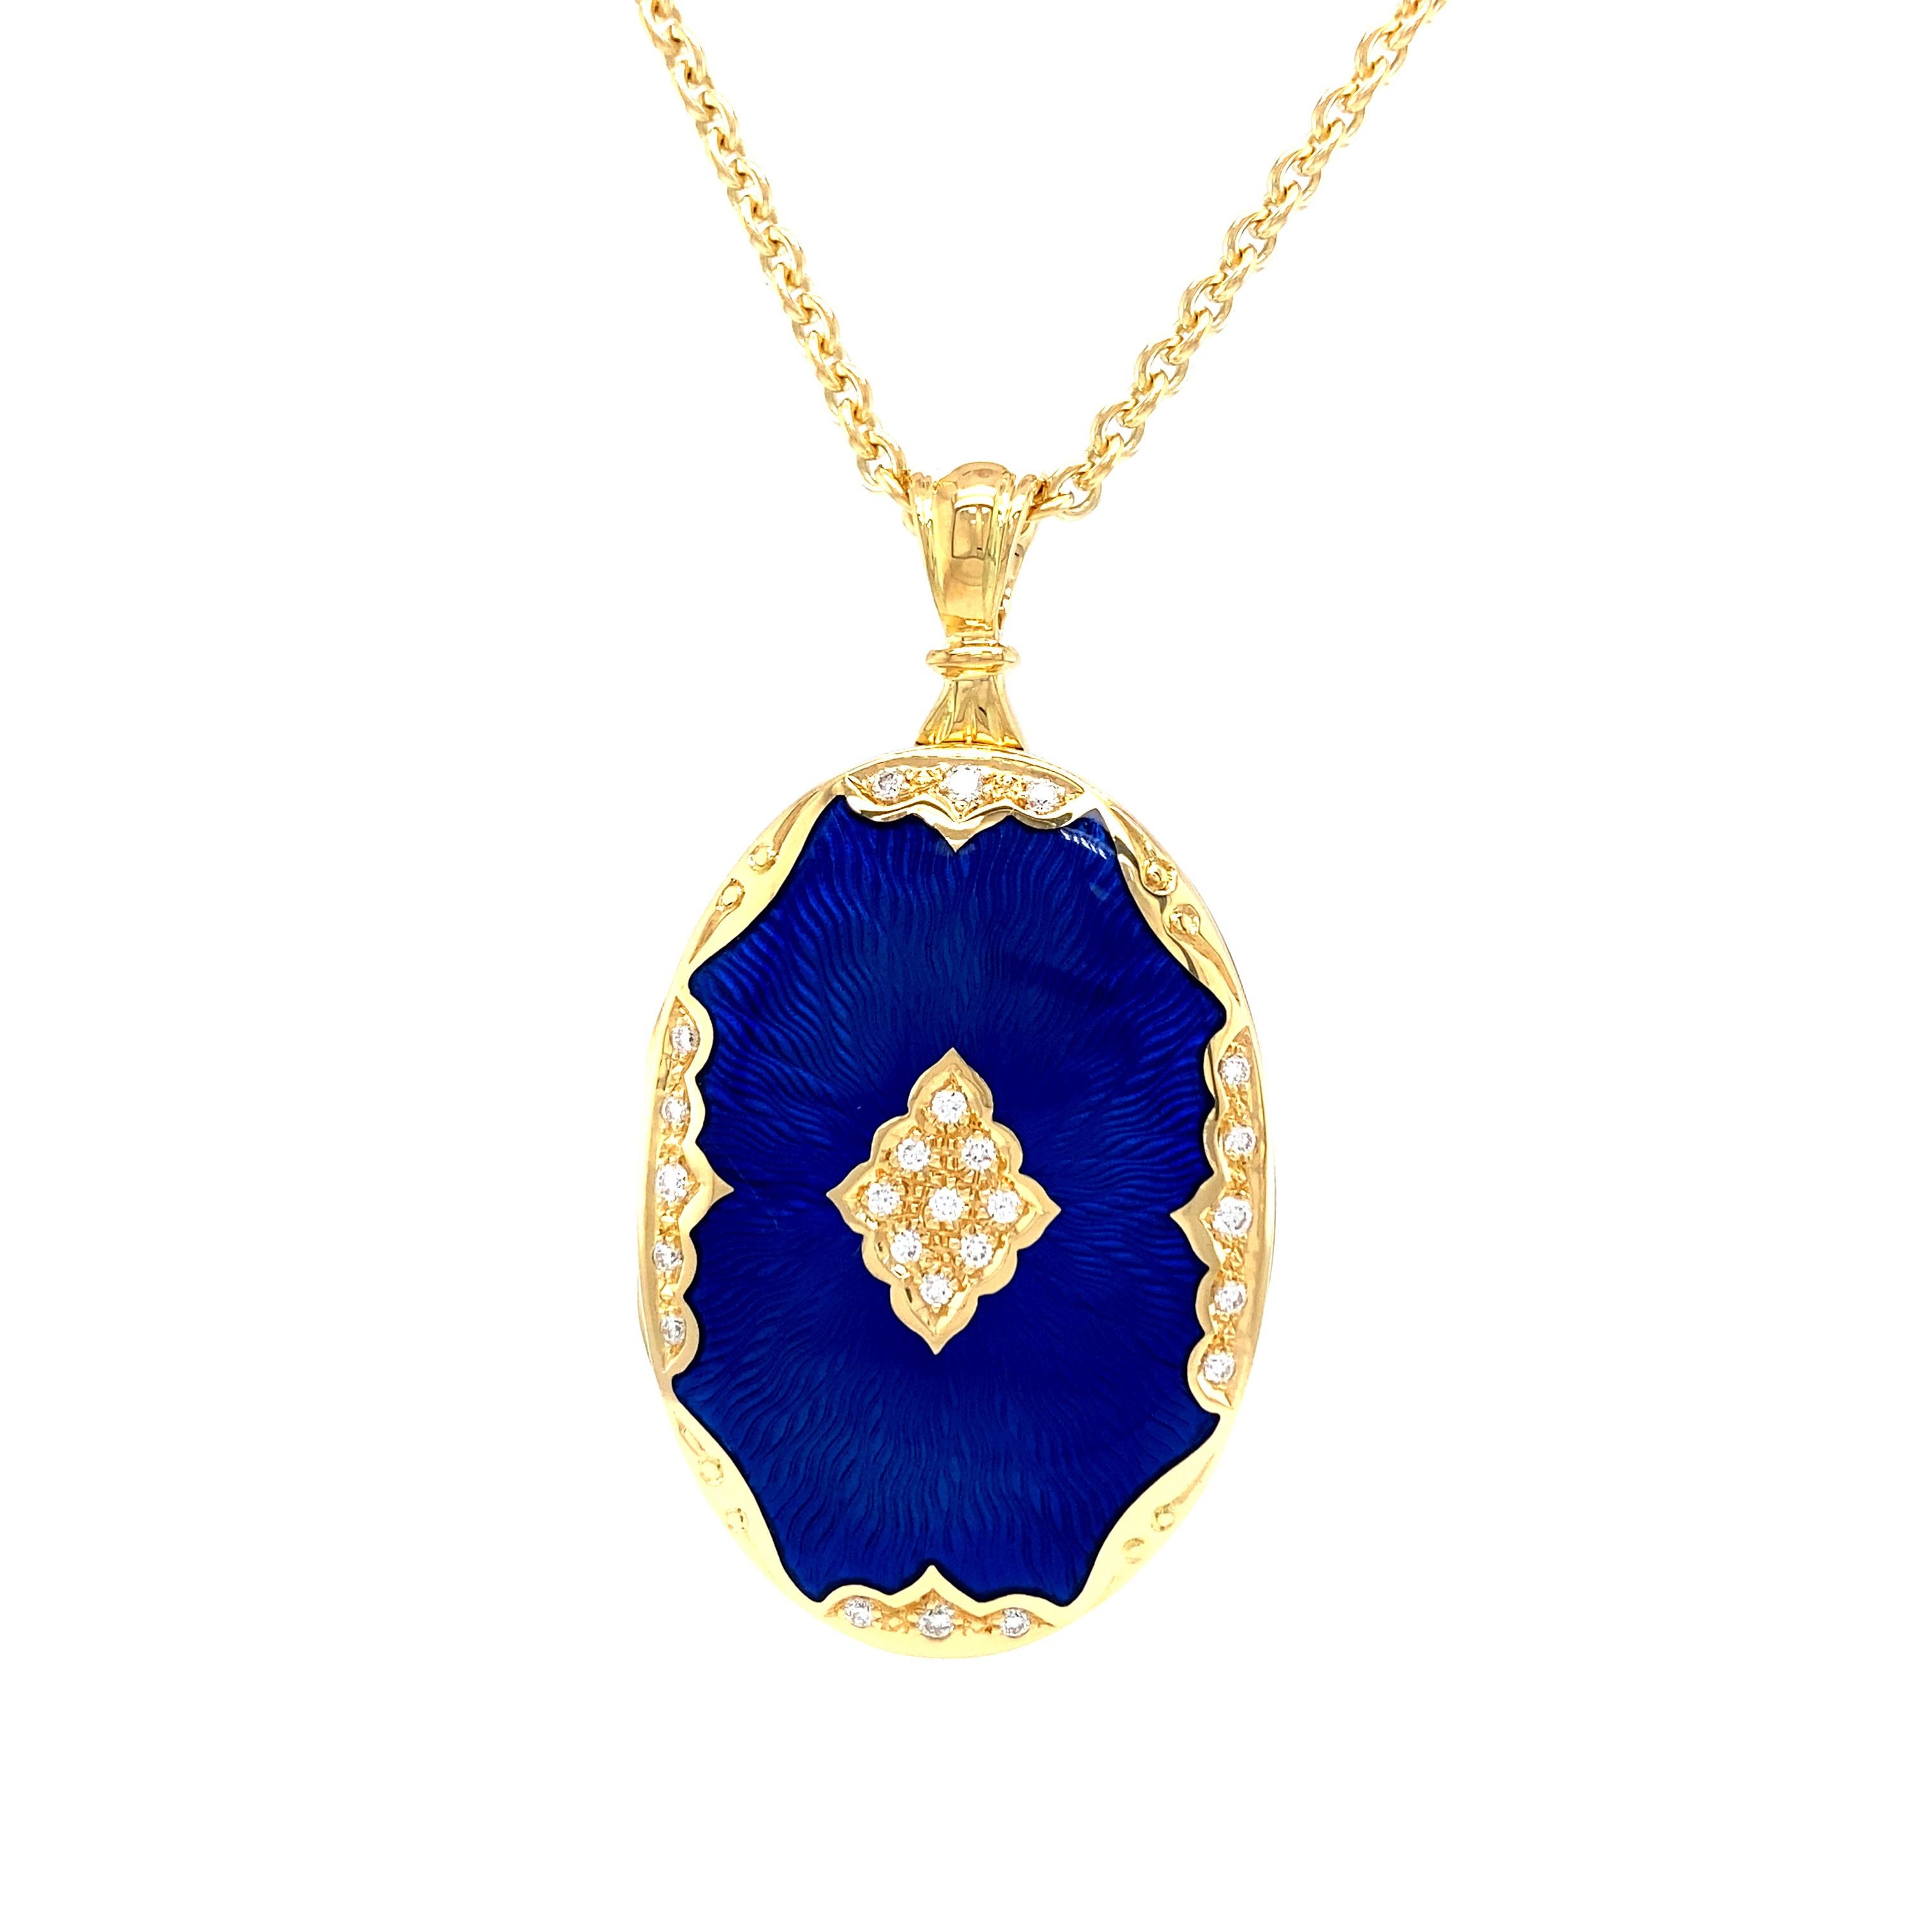 Brilliant Cut Oval Locket Pendant Necklace 18k Yellow Gold Blue Enamel 25 Diamonds 0.19 Carat For Sale